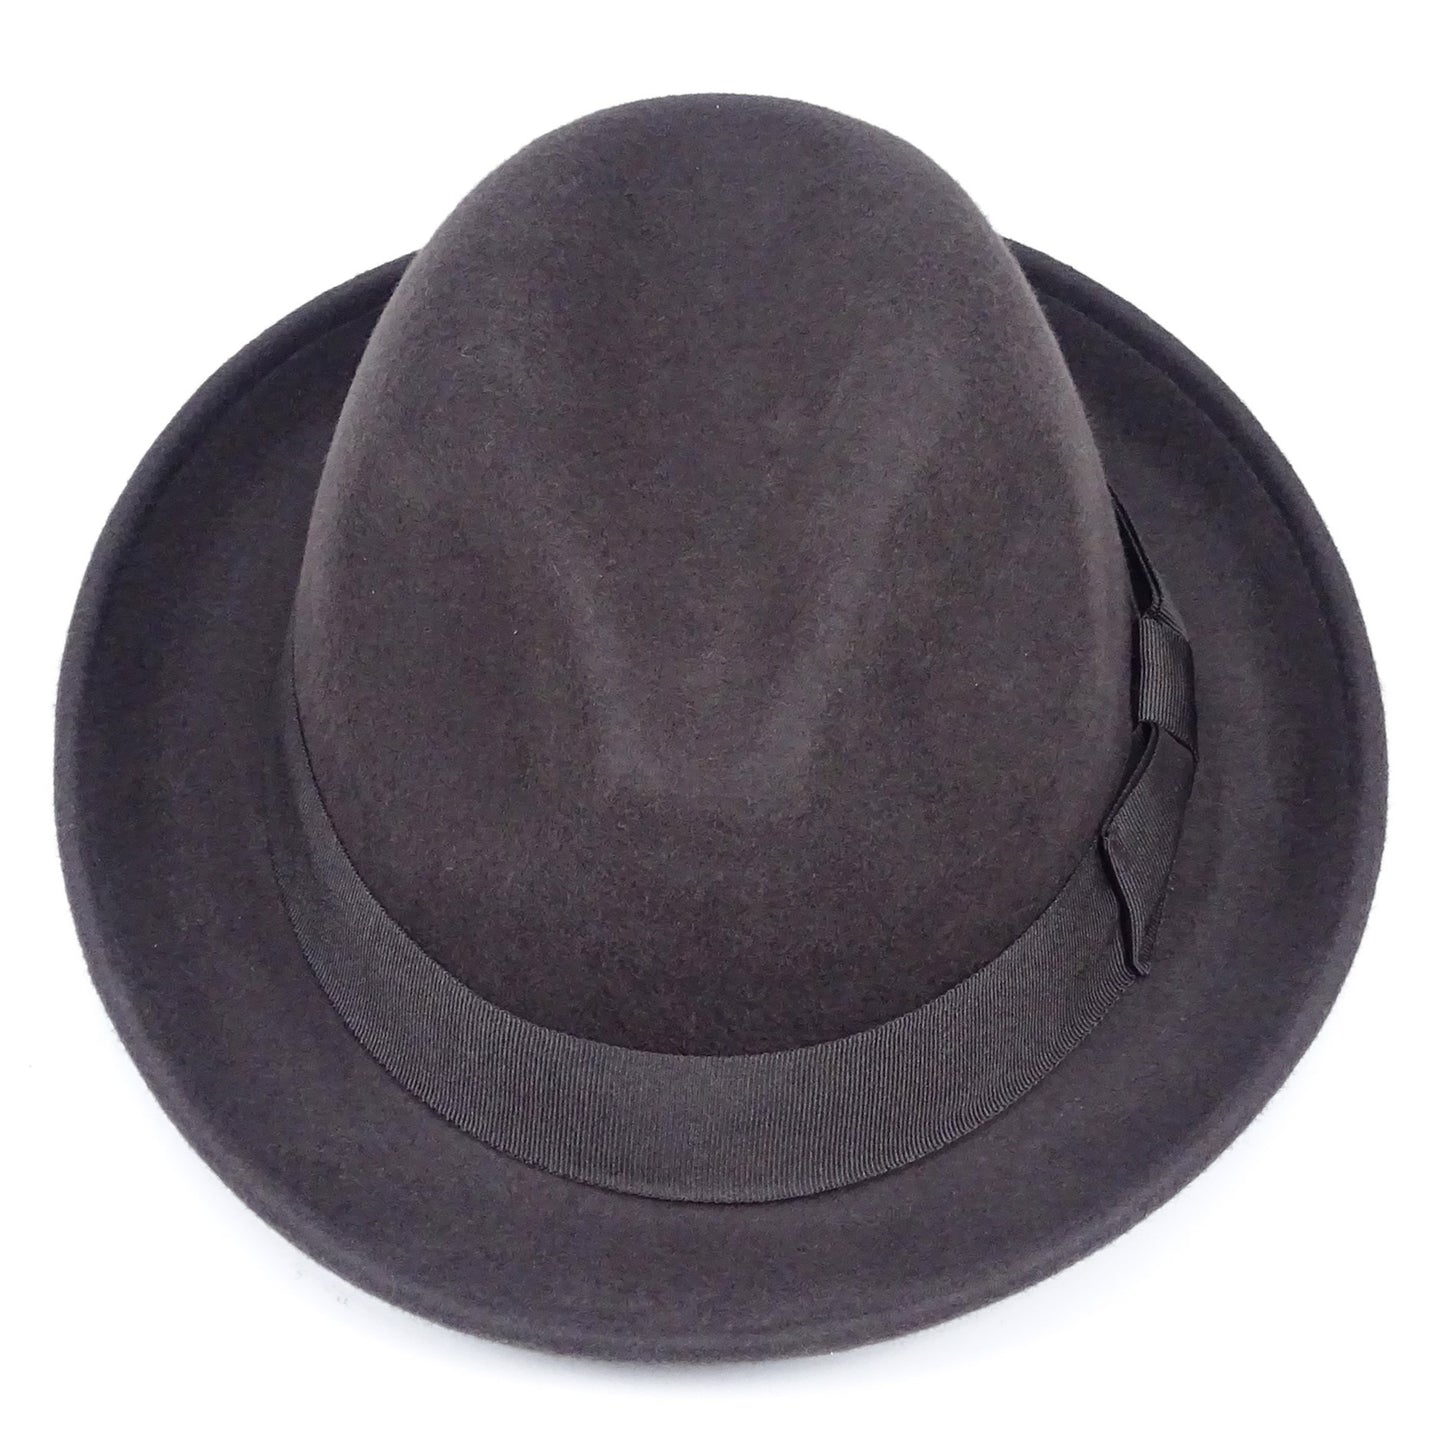 Purely Australian Wool Felt Fedora Hat 3156